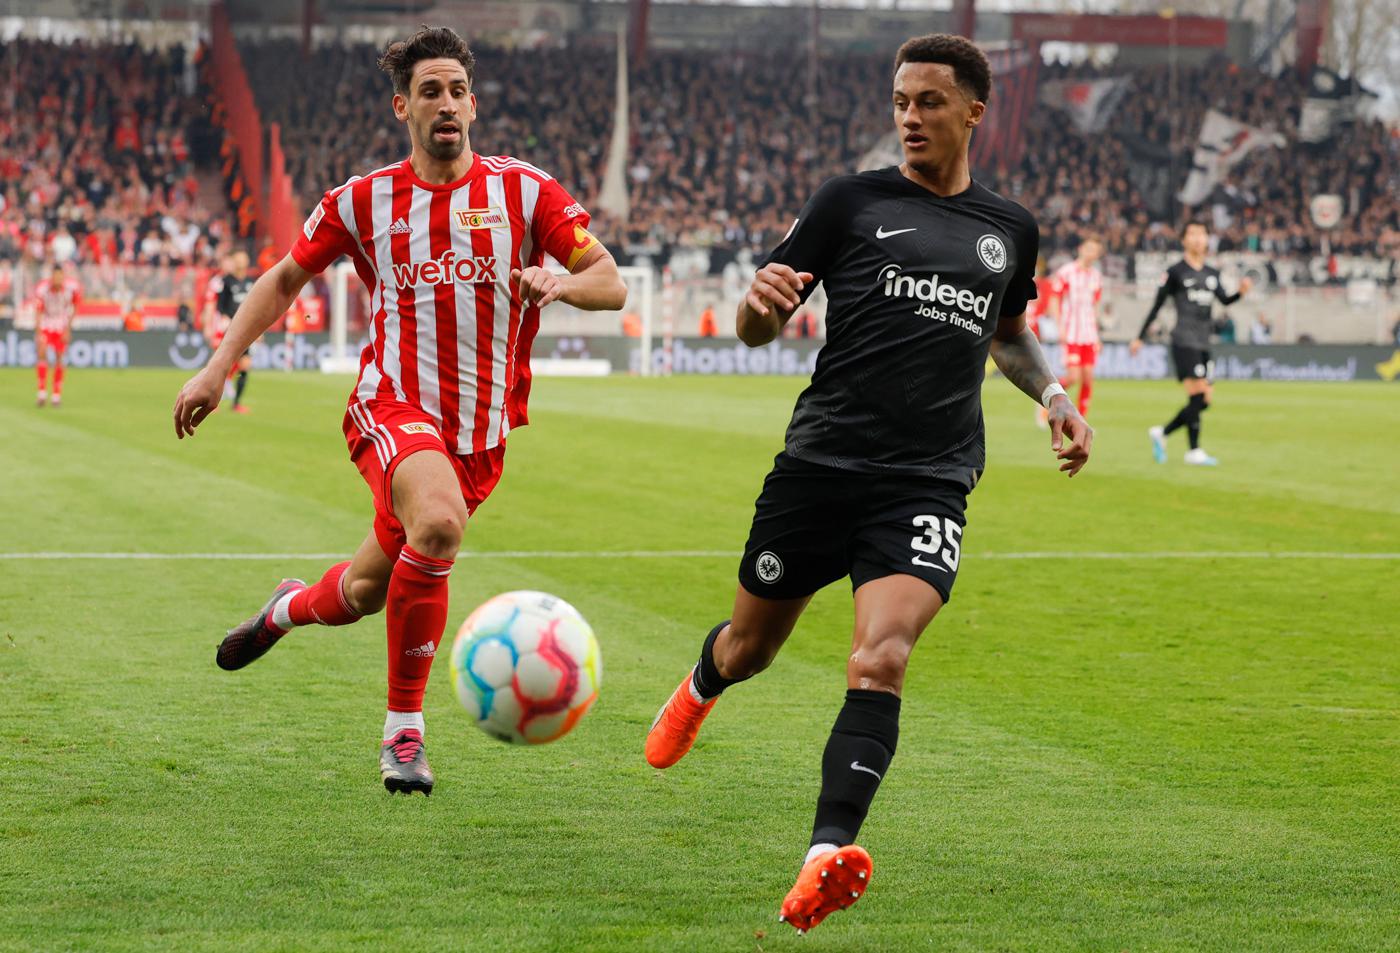 Union vs Eintracht - 2-0. German Championship, 25th round. Match Review, Statistics